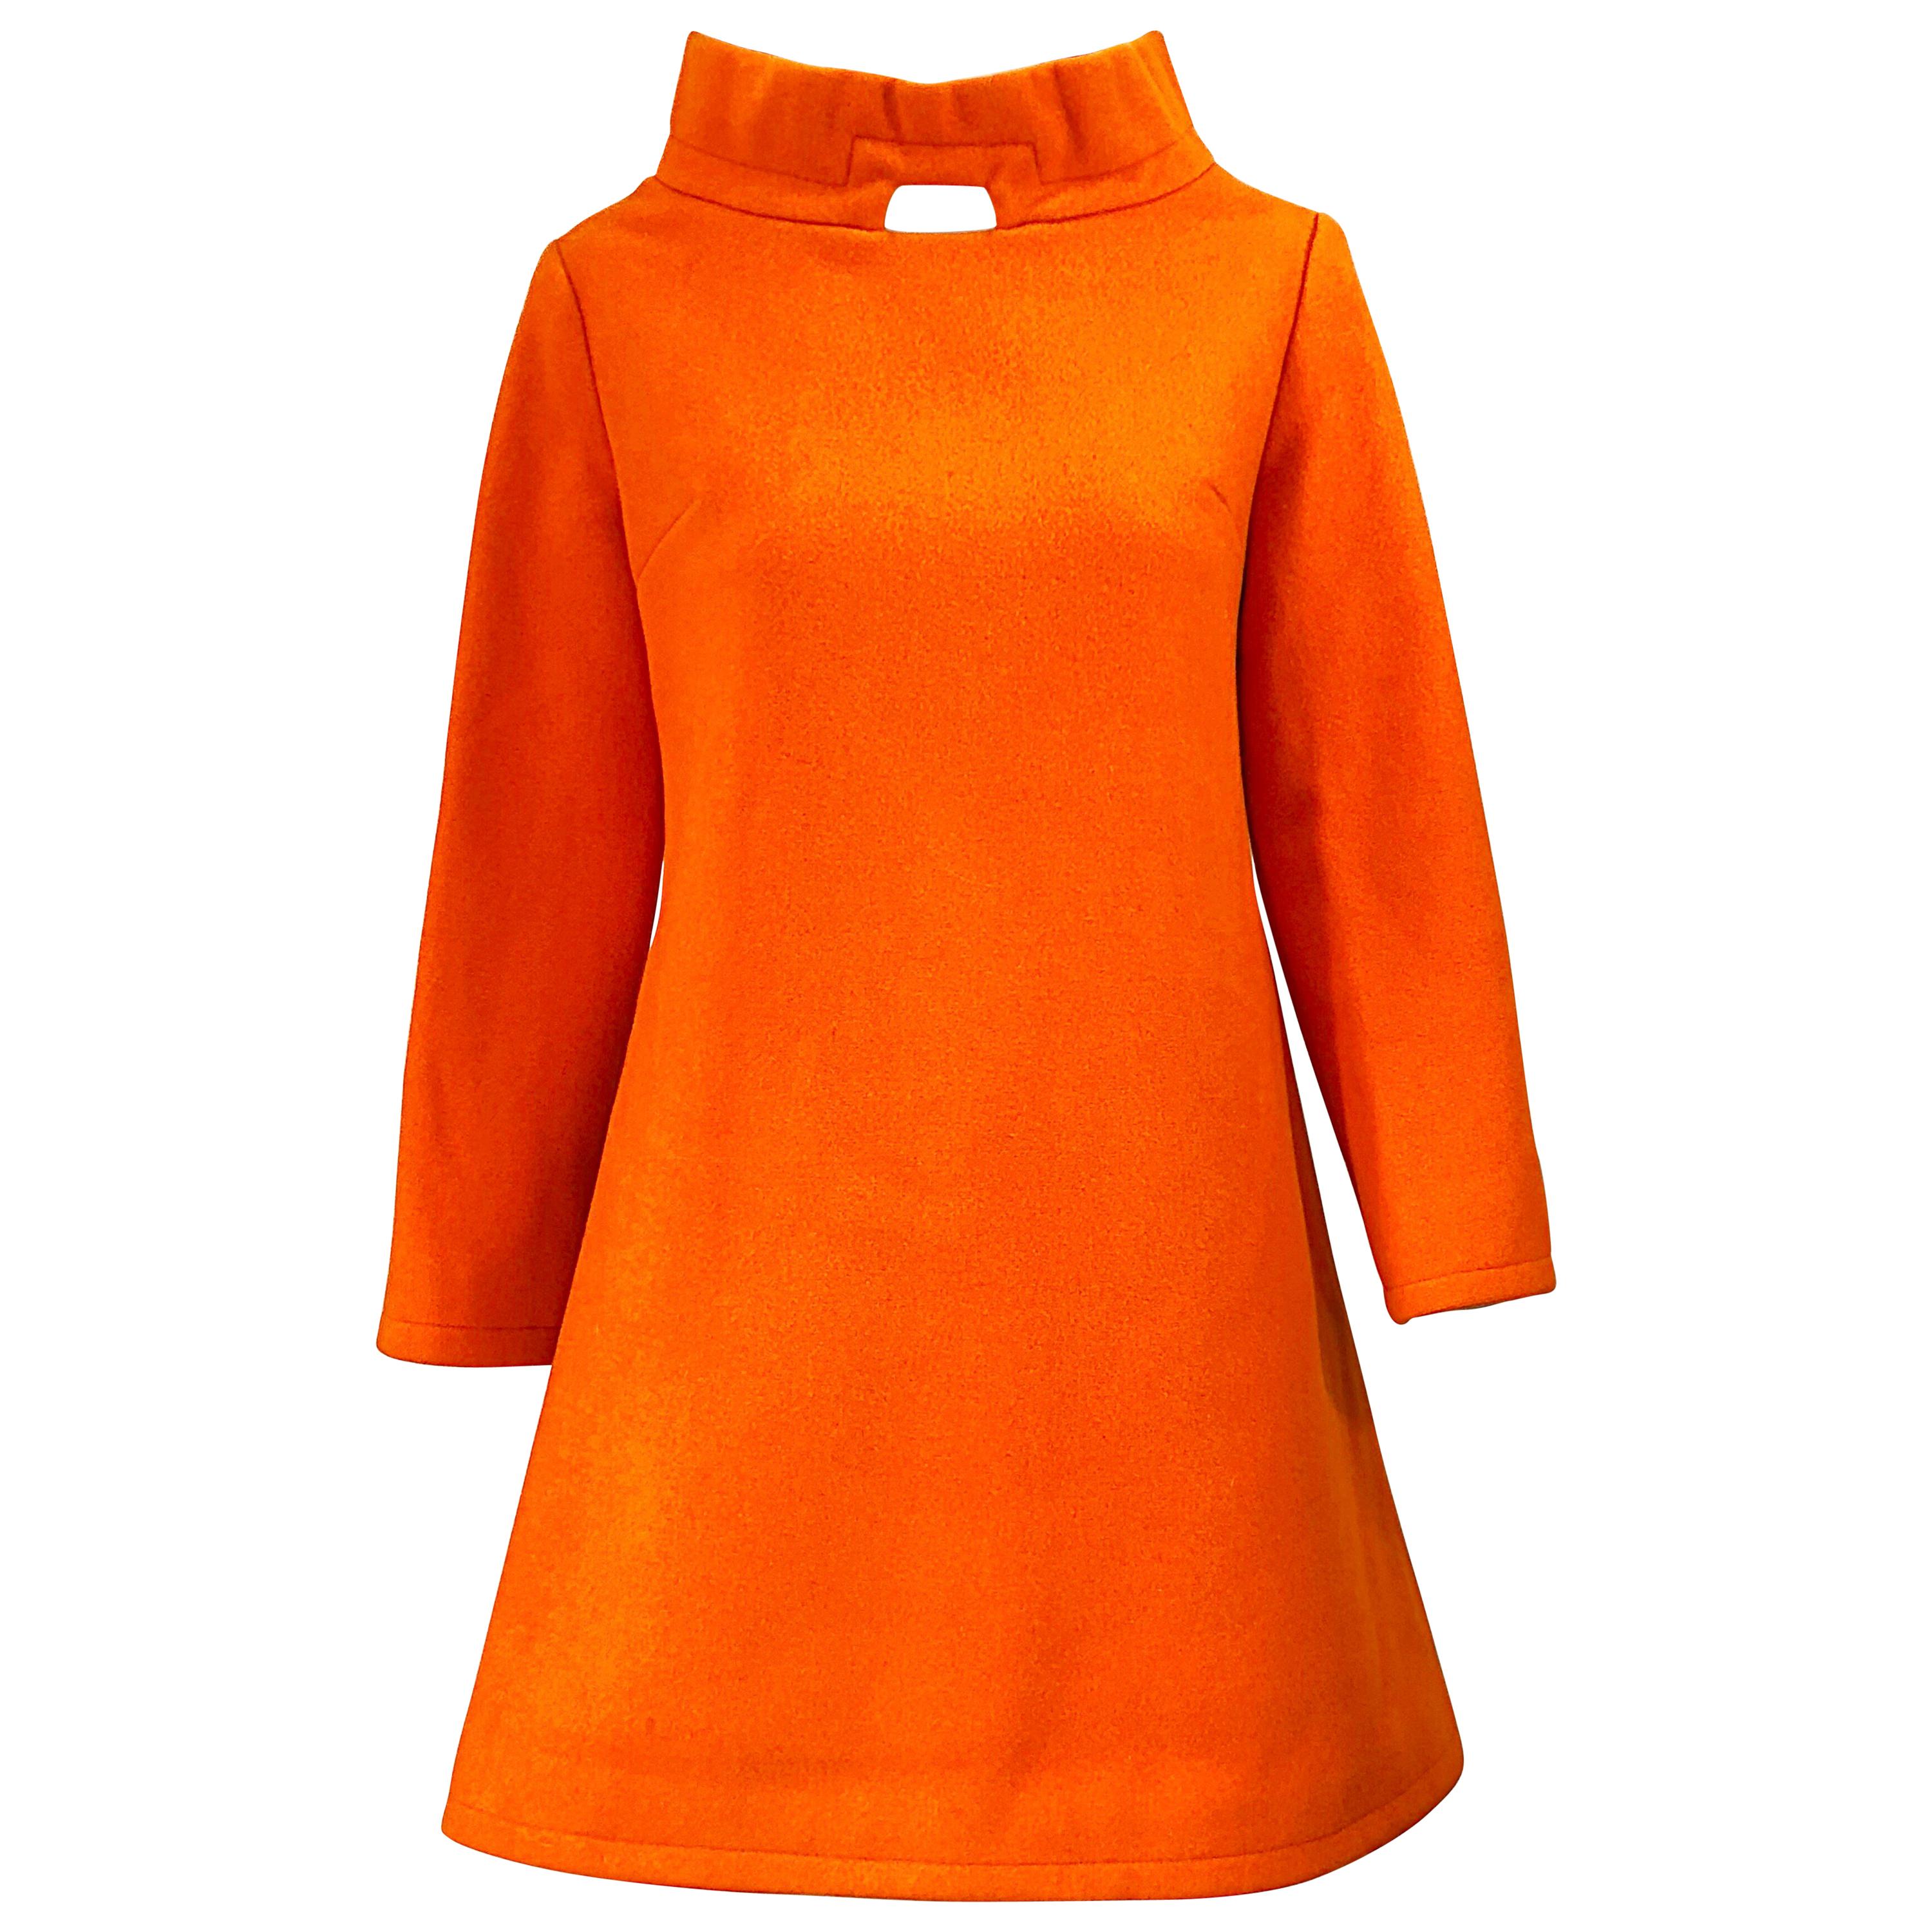 Chic 1960s Orange Wool Mod Space Age Cut Out A Line Vintage 60s Mini Dress Tunic